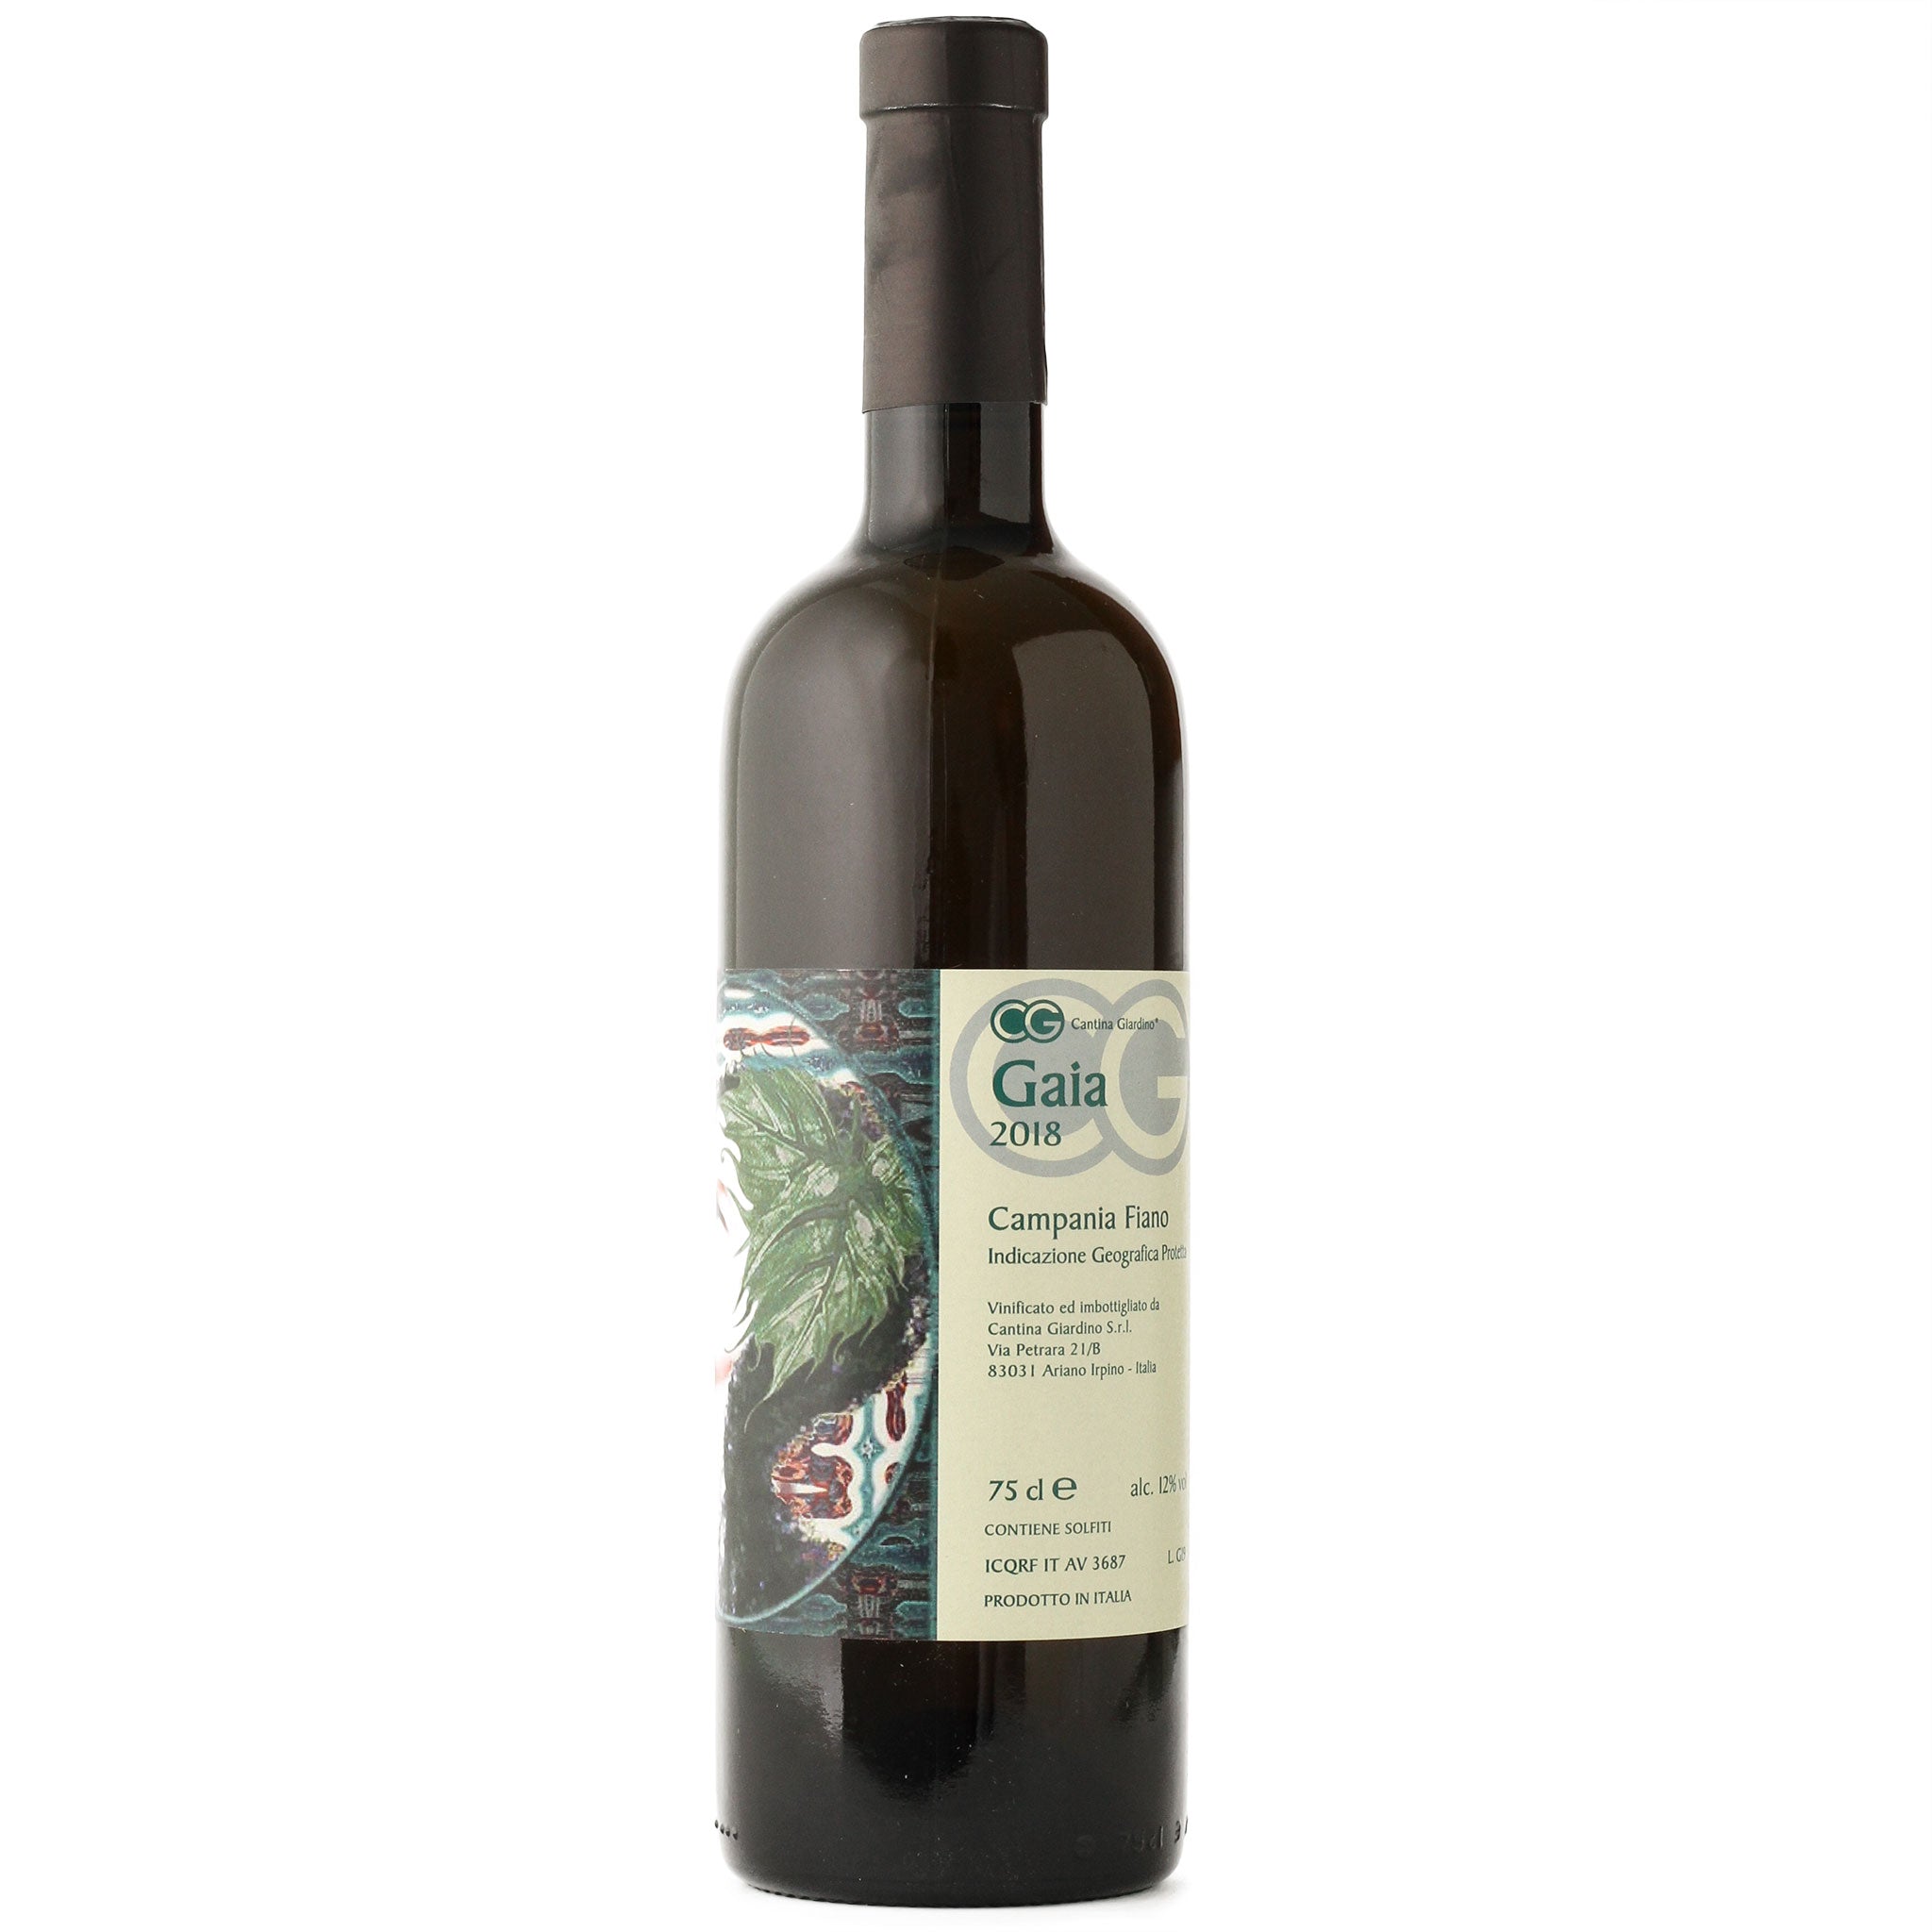 2018 Cantina Giardino Fiano “Gaia” – Golden Age Wine